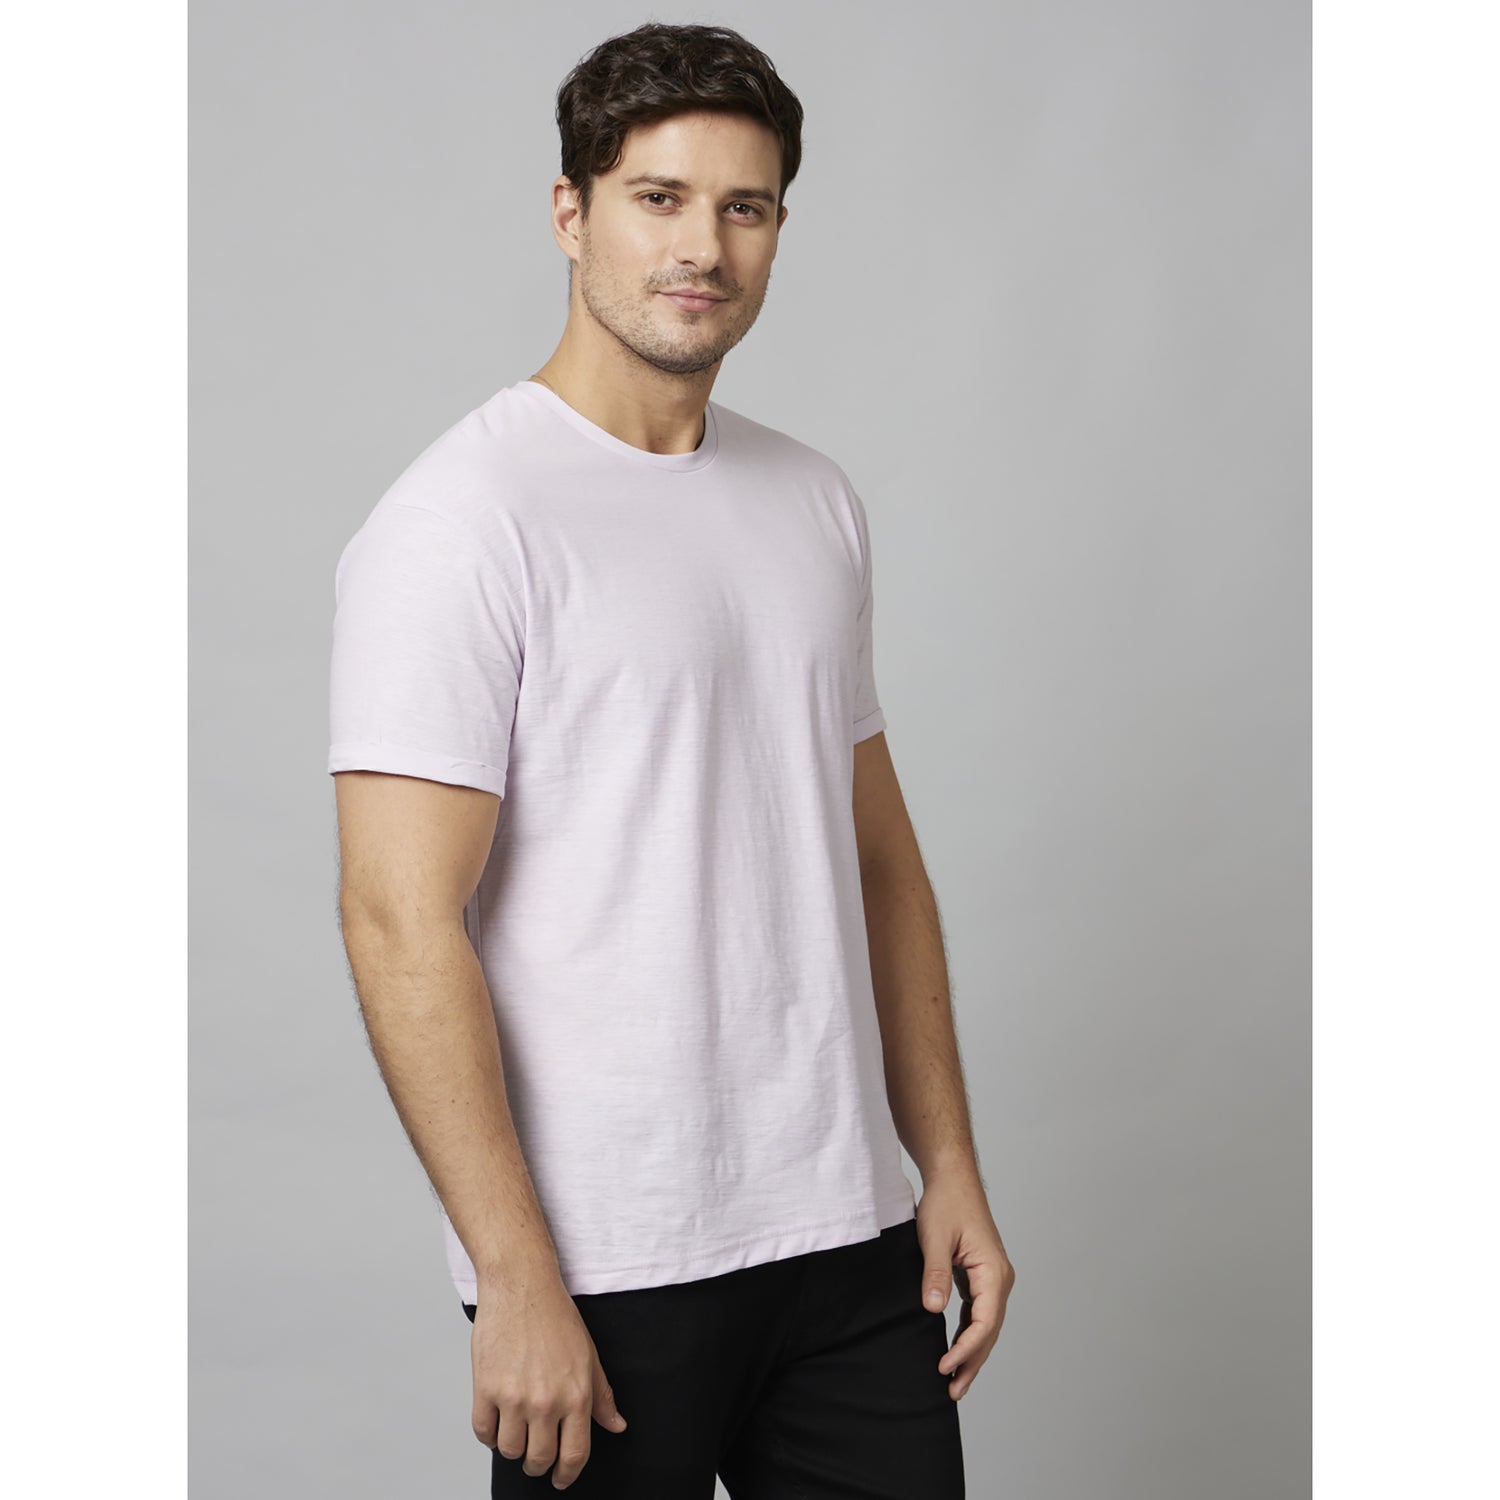 Purple Solid Short Sleeve Cotton T-Shirts (FECOLA)